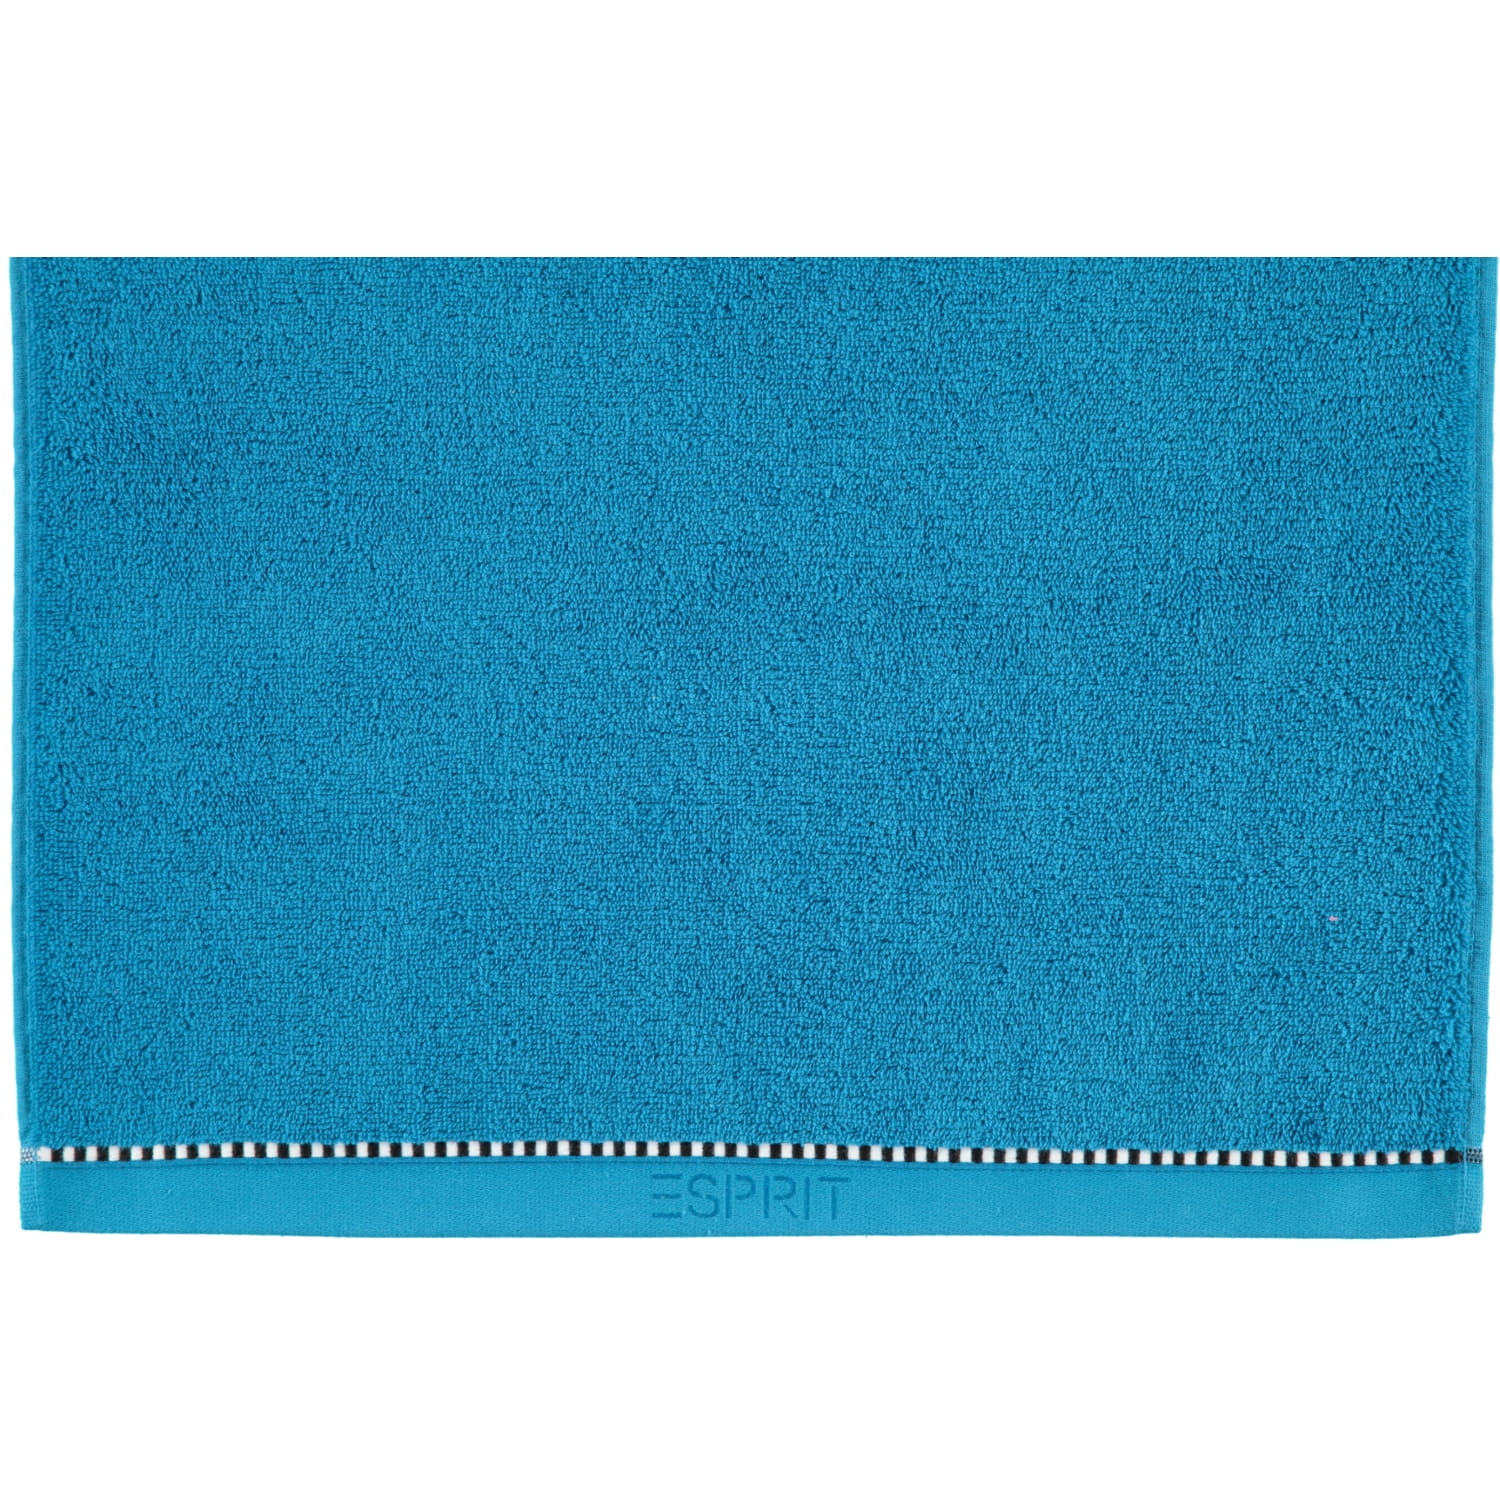 - Marken ocean | | Esprit Box Handtücher 4665 blue Solid Farbe: | ESPRIT - ESPRIT